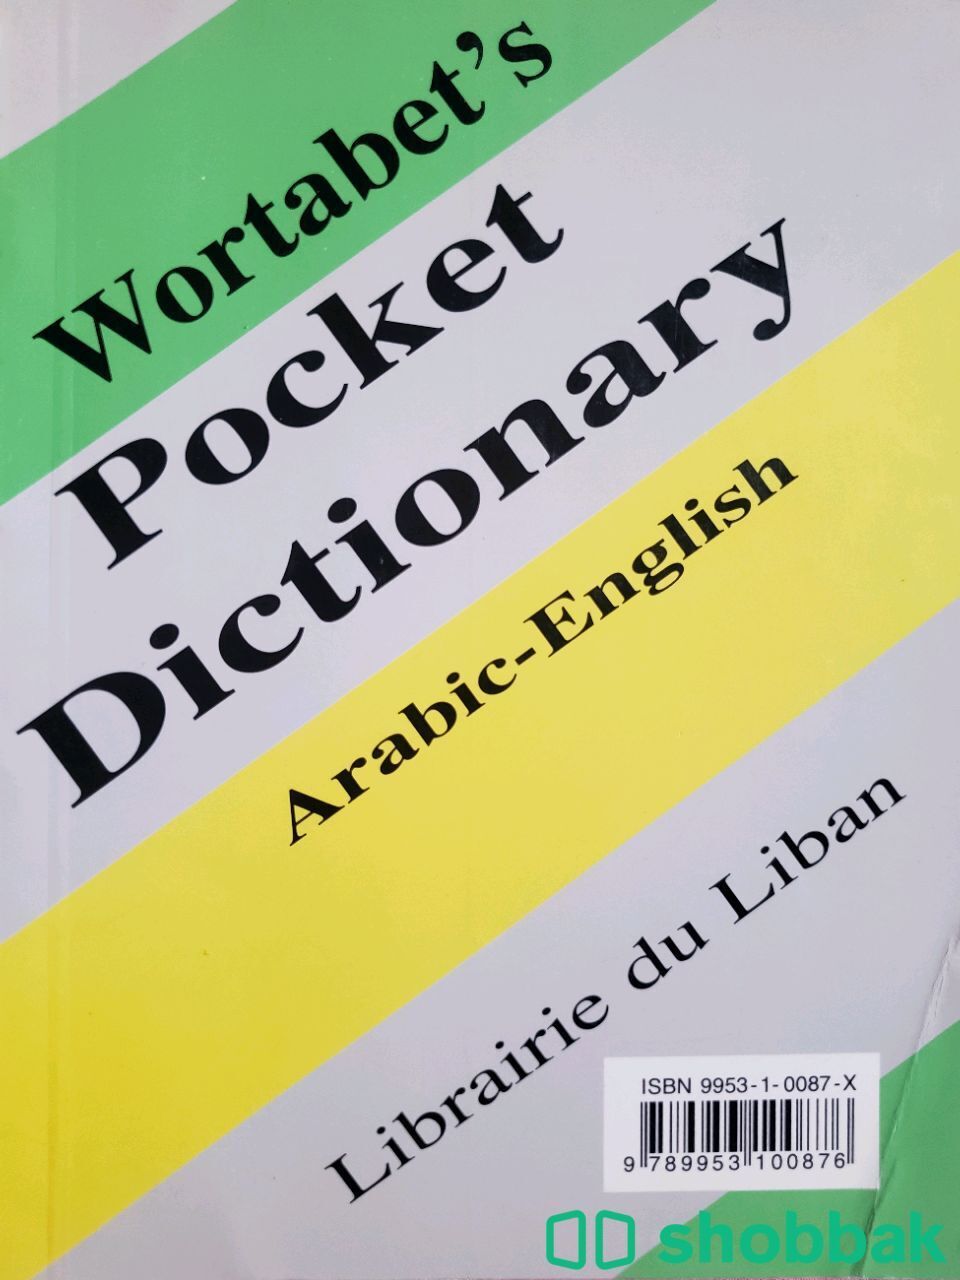 قاموس عربي-انجليزي Shobbak Saudi Arabia